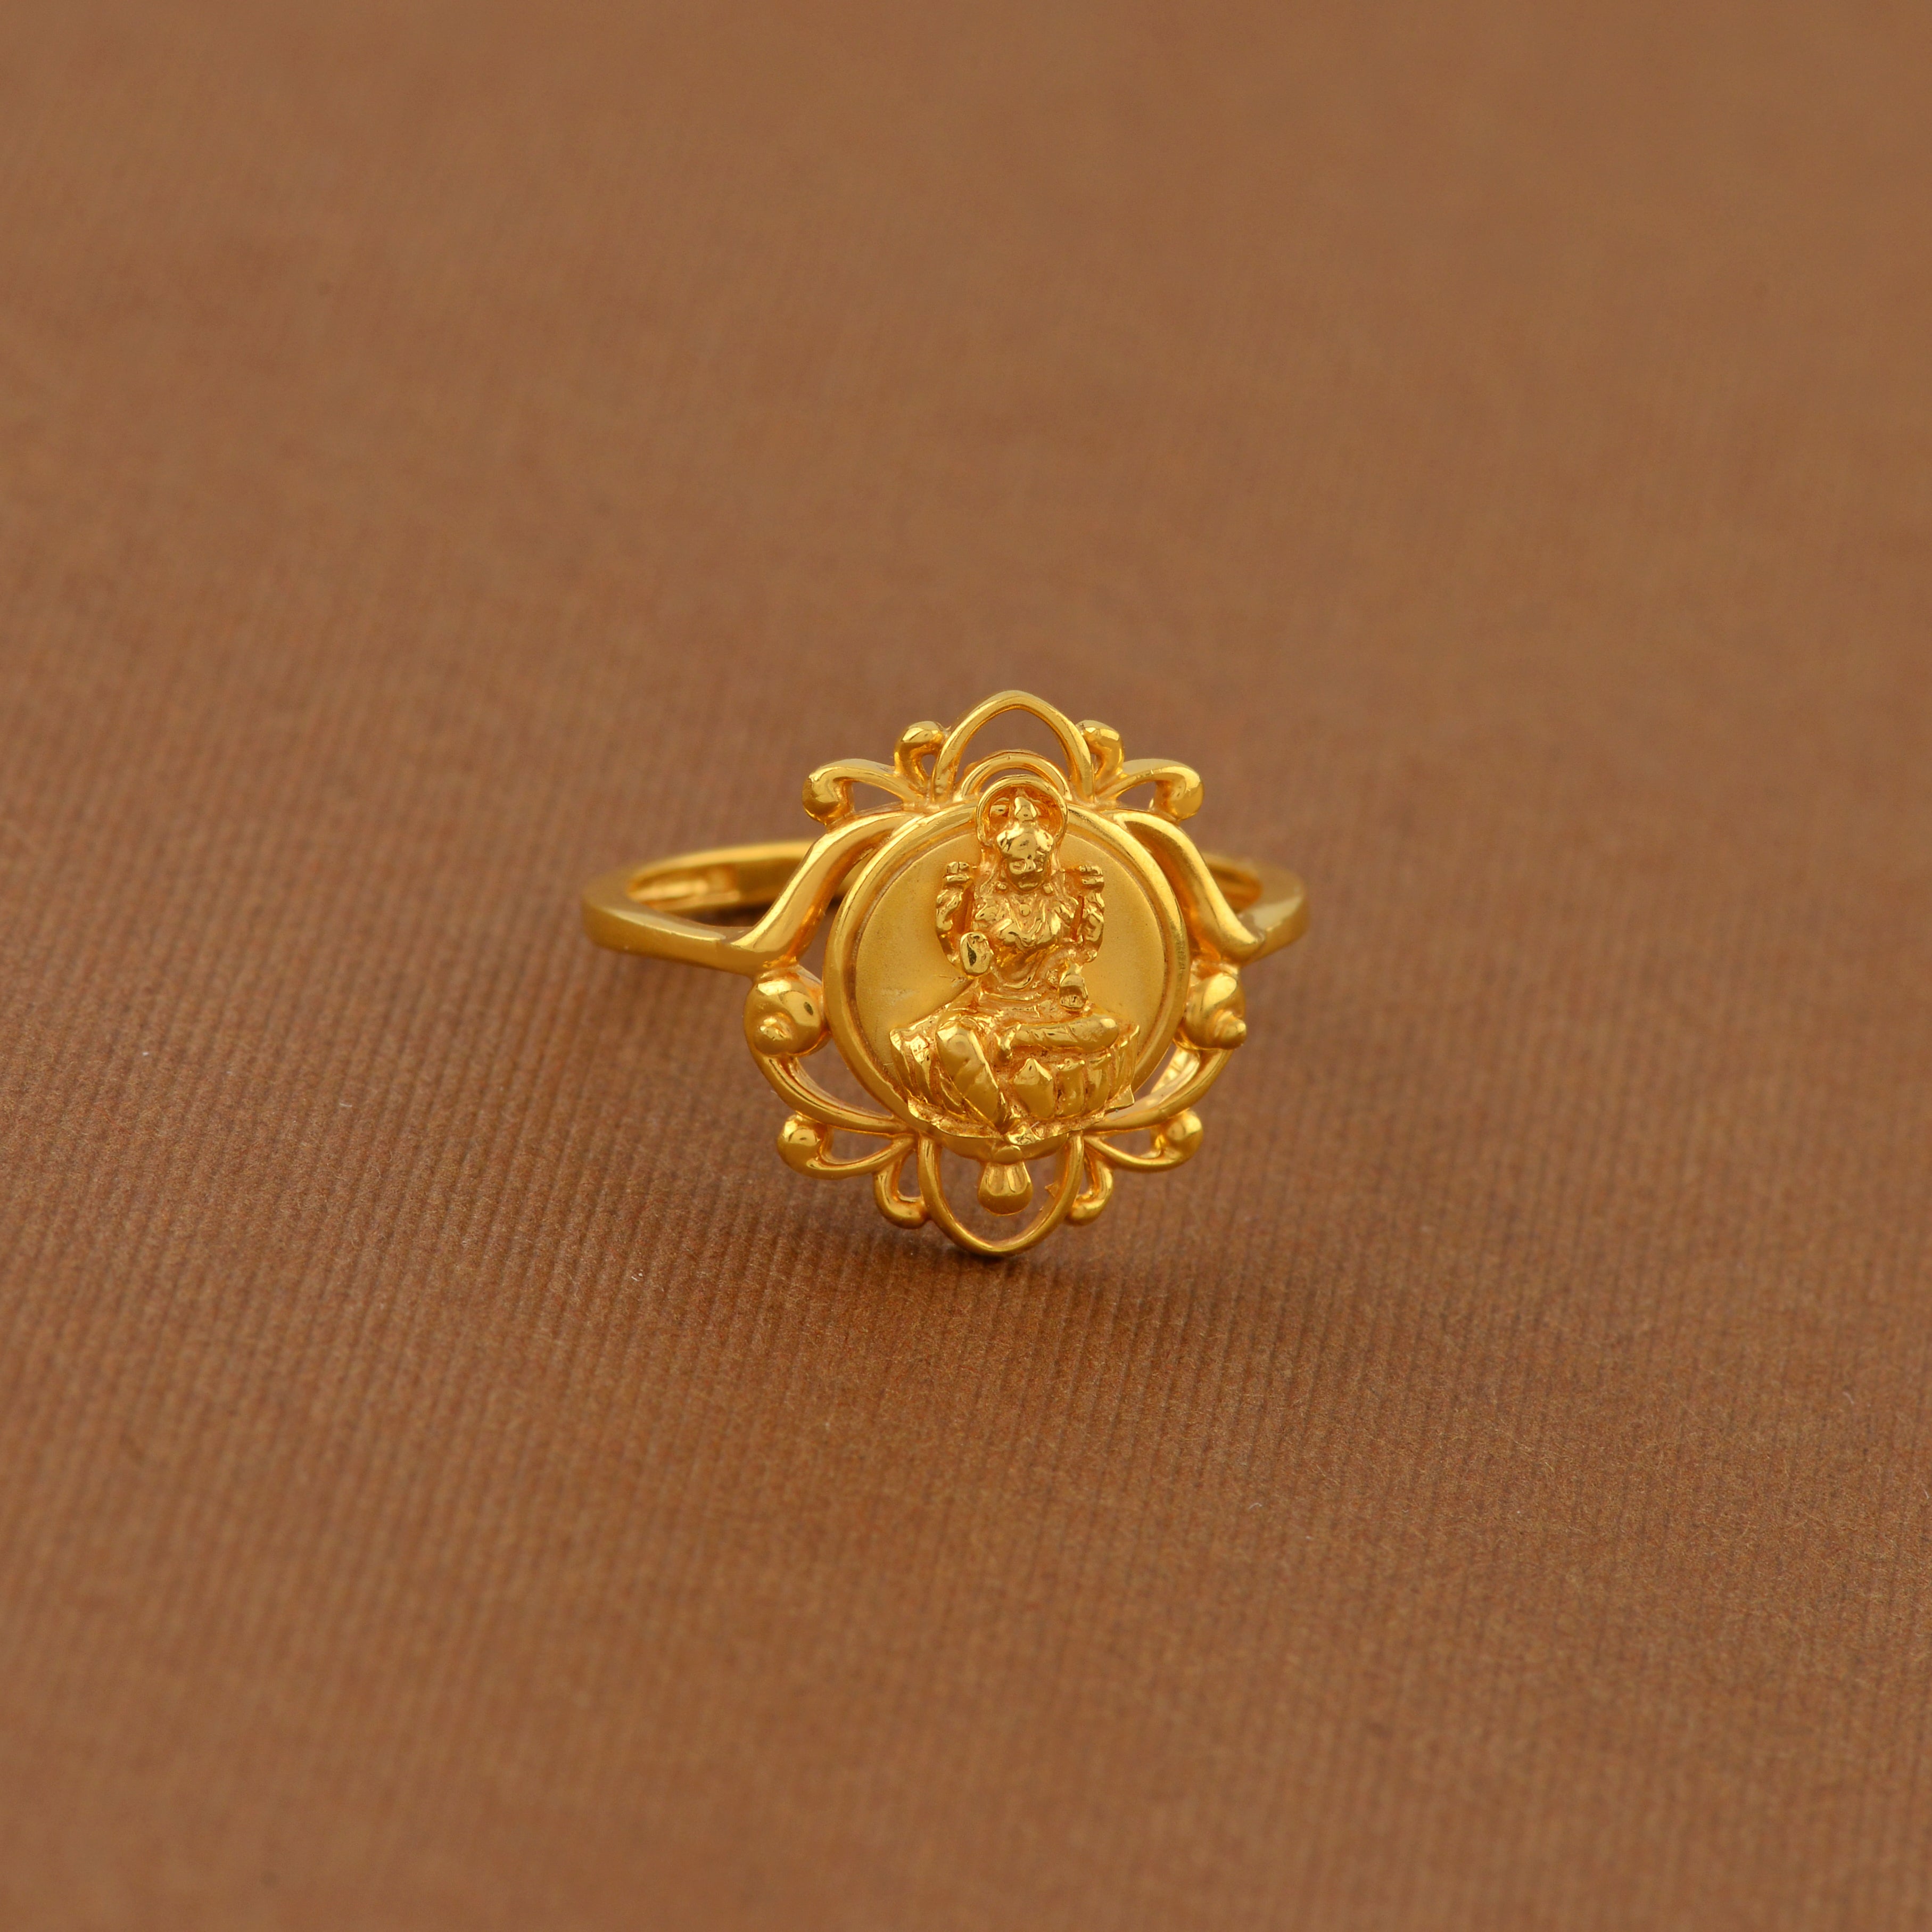 22K Gold 'Lakshmi' Ring For Women with Cz - 235-GR5953 in 3.900 Grams